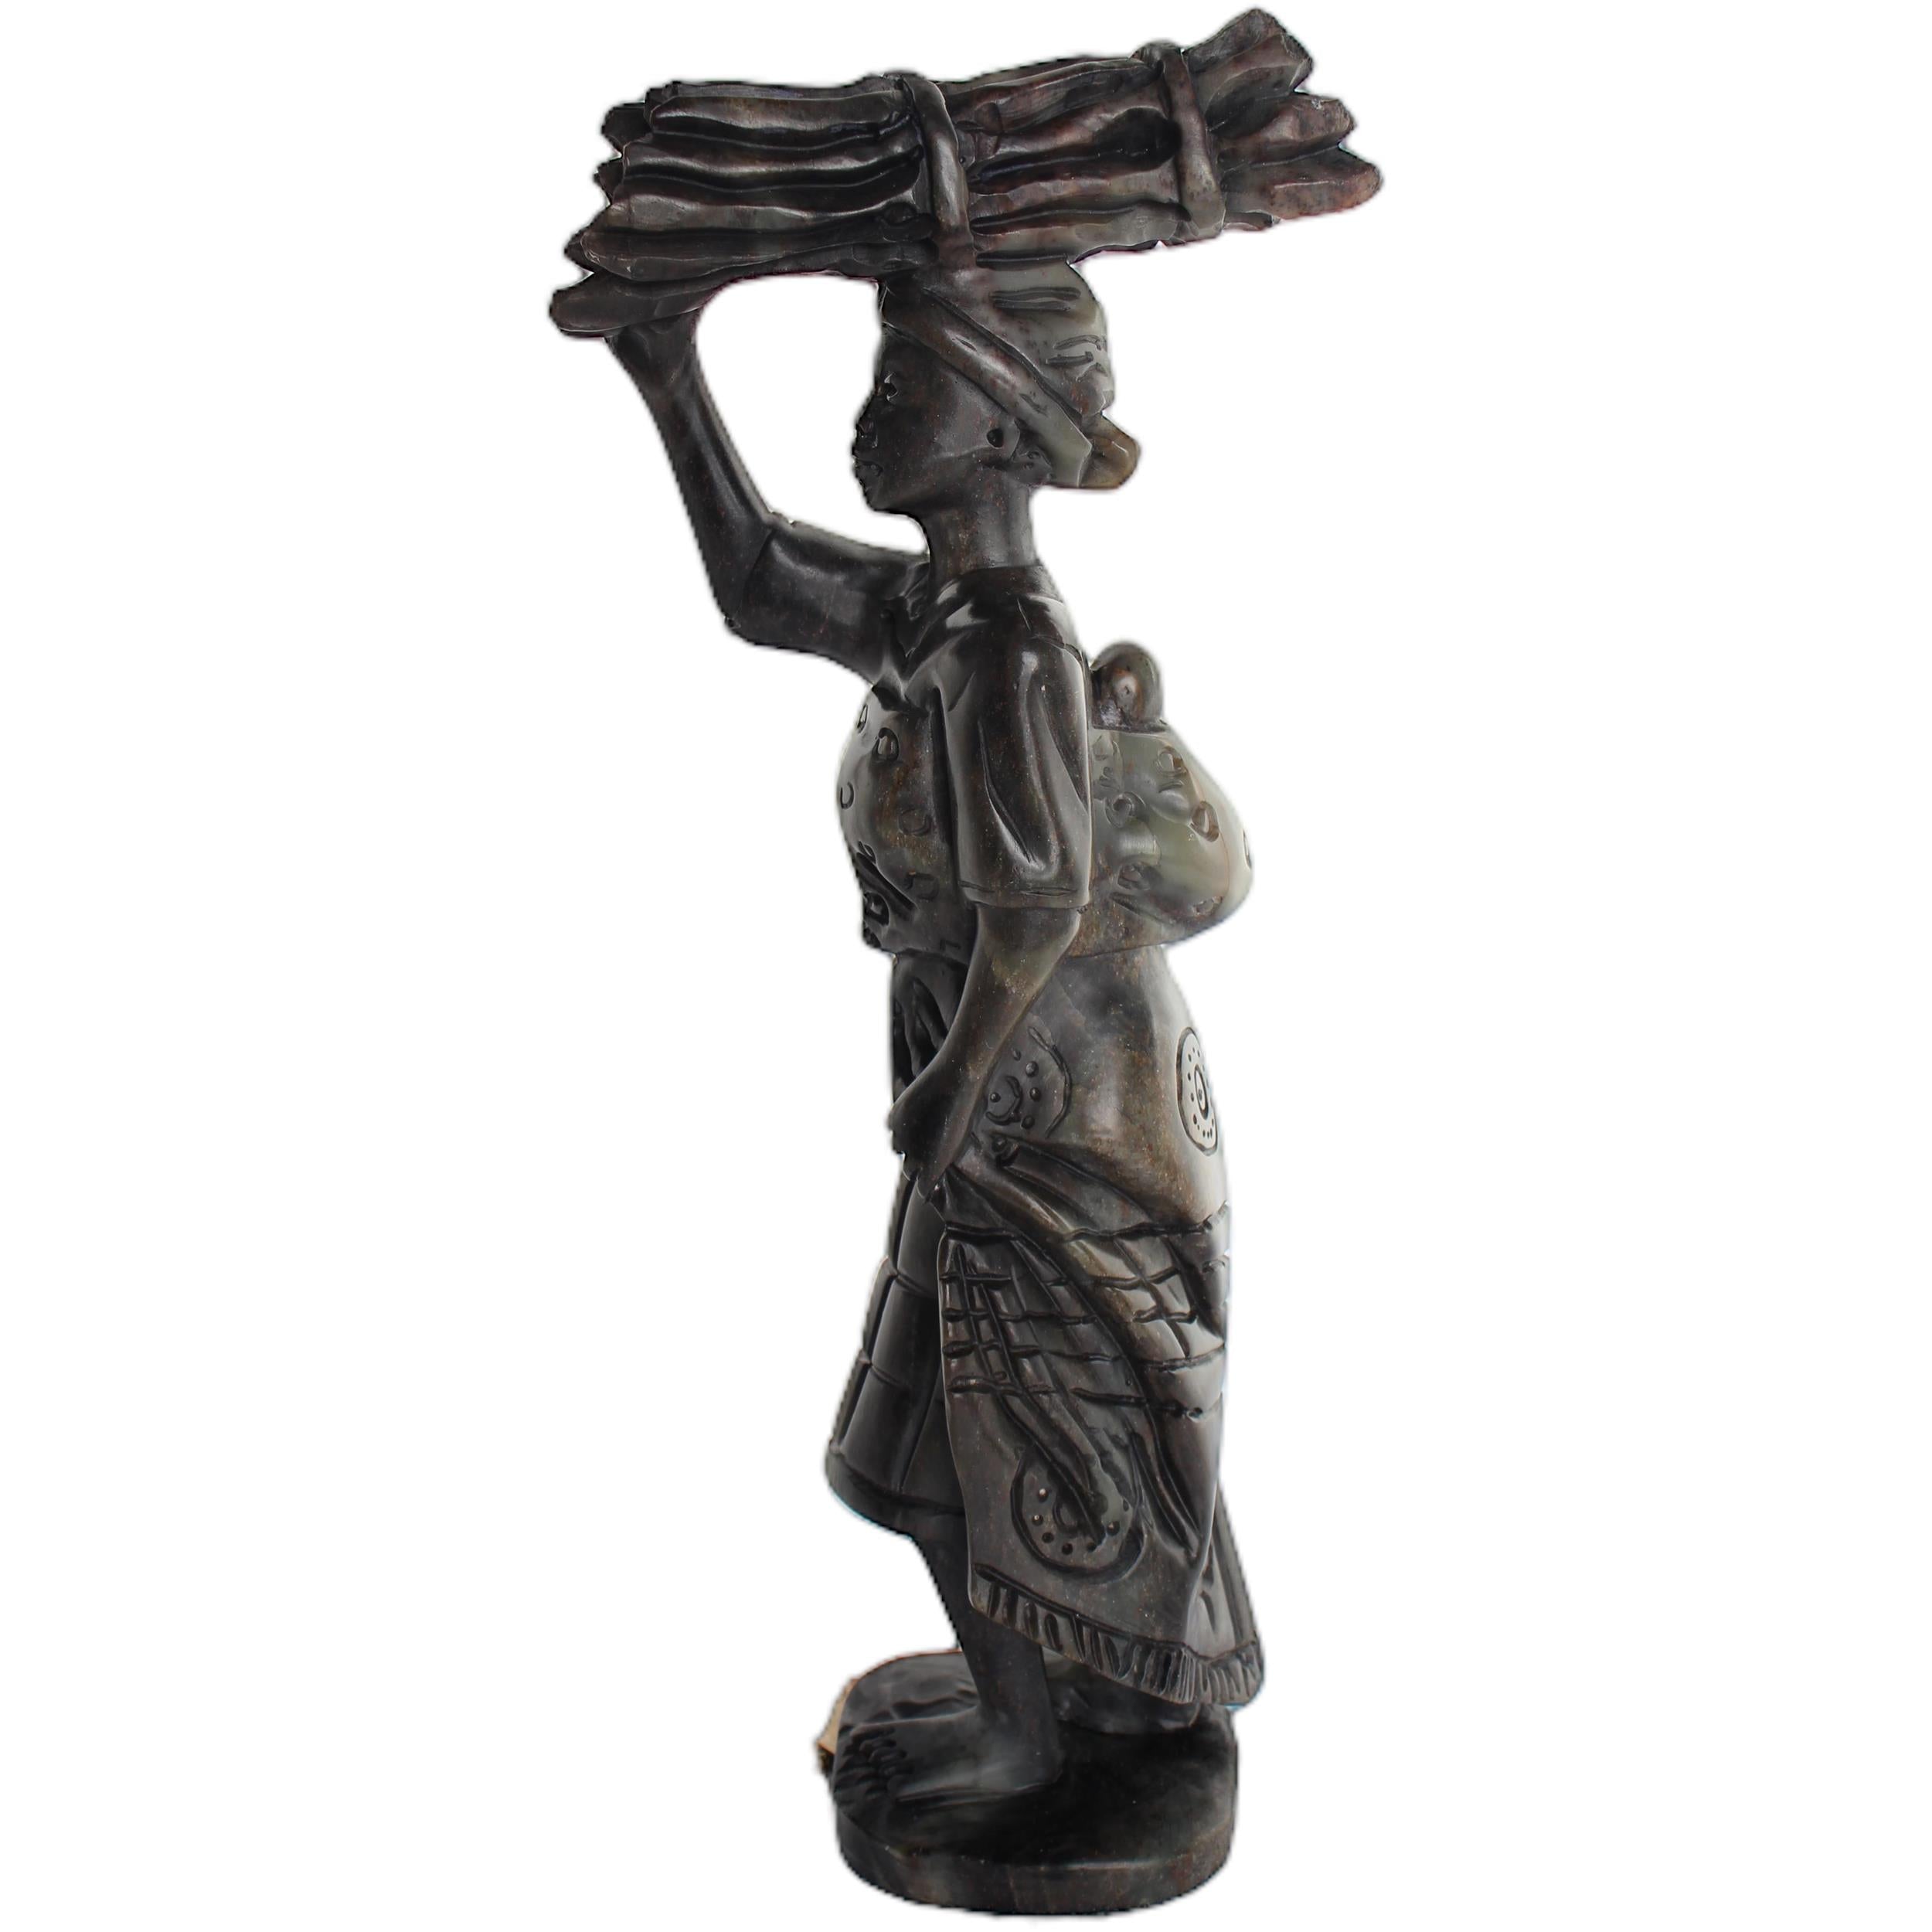 Shona Tribe Serpentine Stone Warrior Figure ~12.6" Tall - Warrior Figure